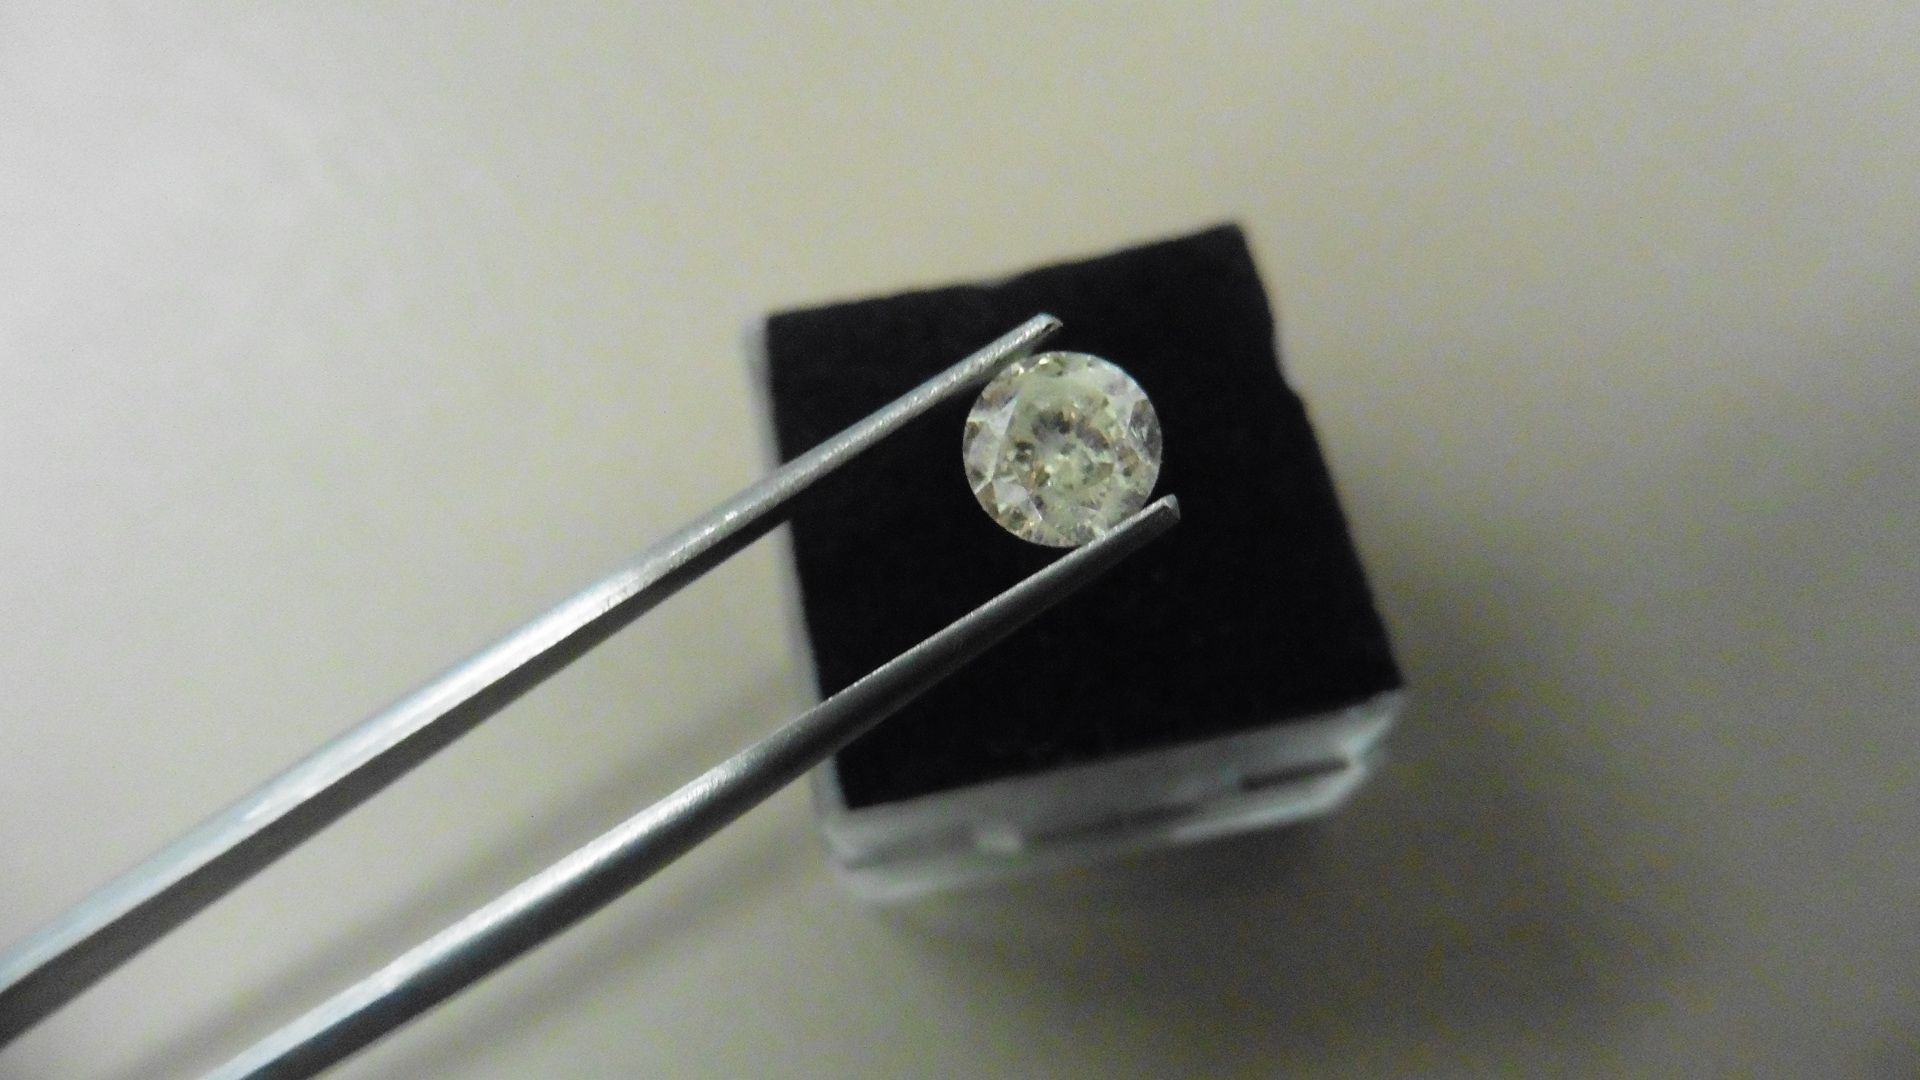 1.09ct Brilliant Cut Diamond, Enhanced stone. H colour, I2 clarity. 6.42 x 3.95mm. Valued at £